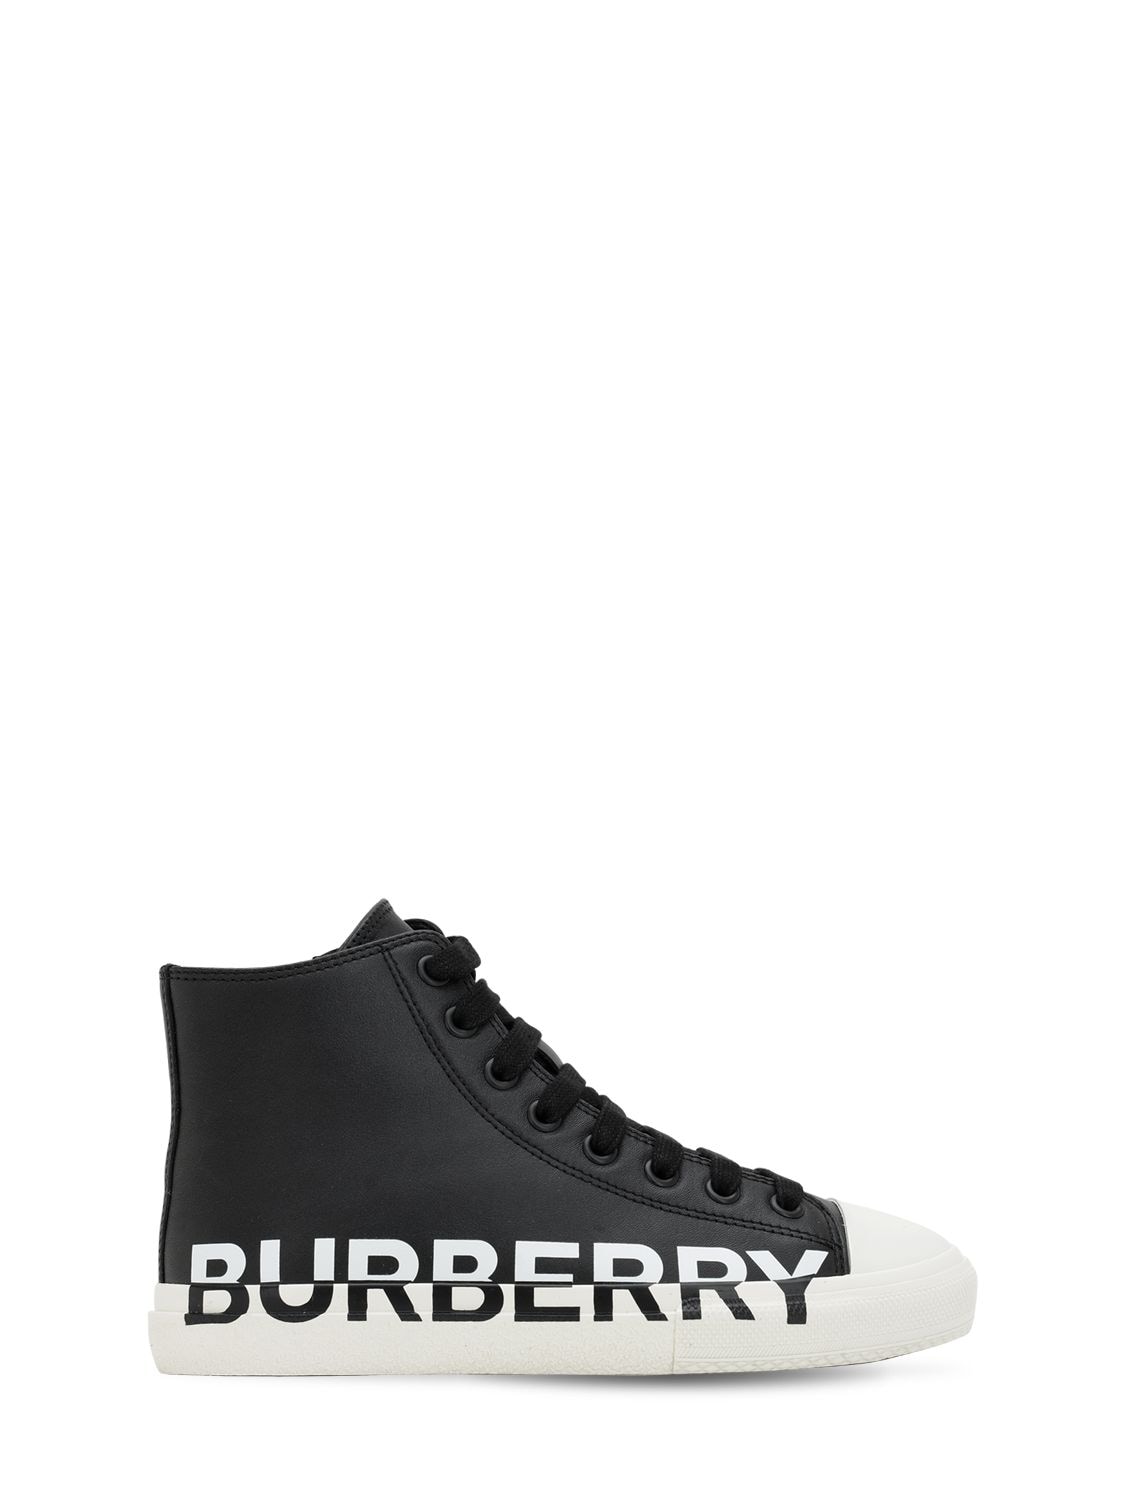 BURBERRY 印LOGO皮革运动鞋,70I1WM006-QTEXODK1